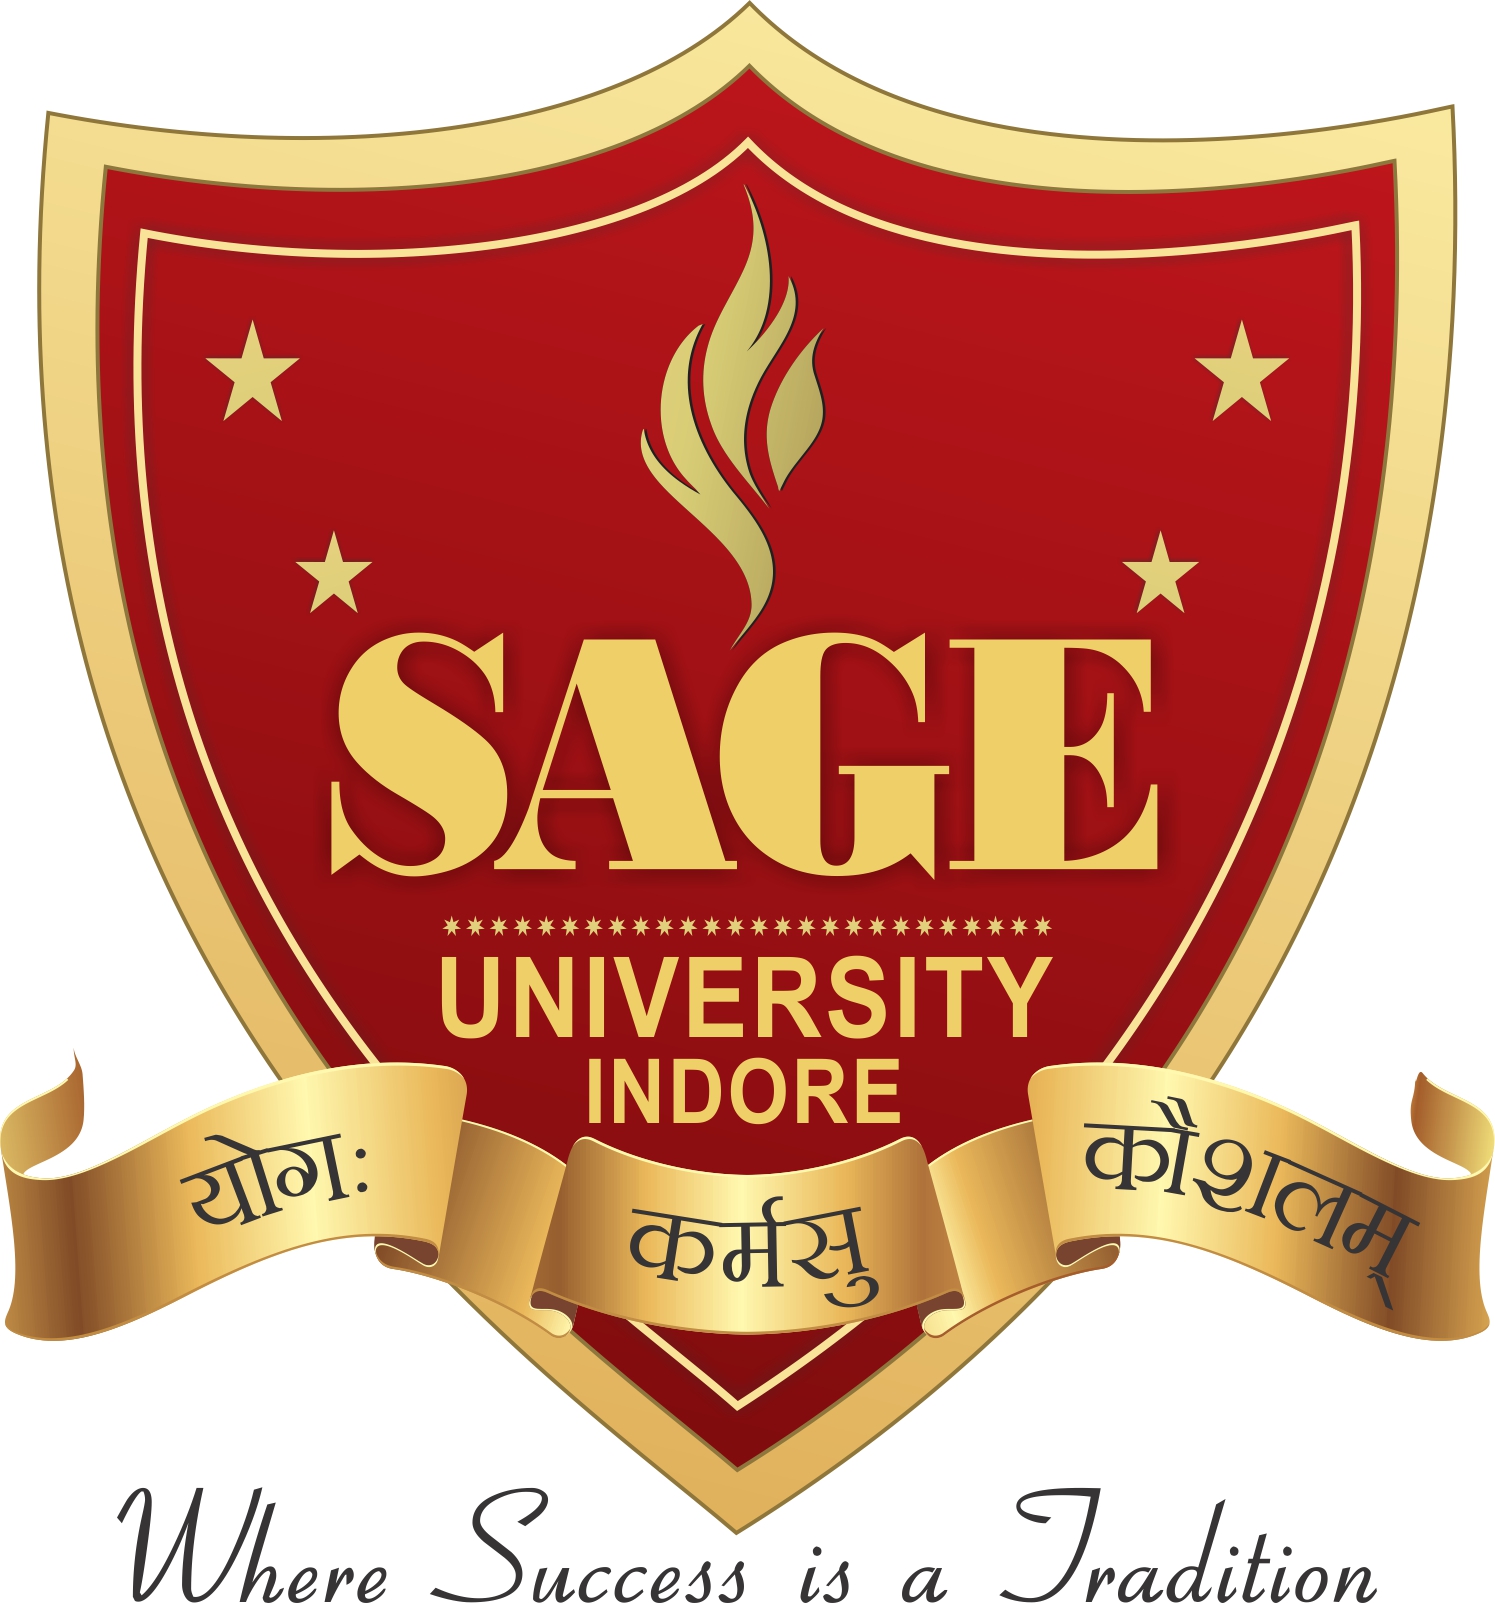 File:Sage Group logo.svg - Wikimedia Commons